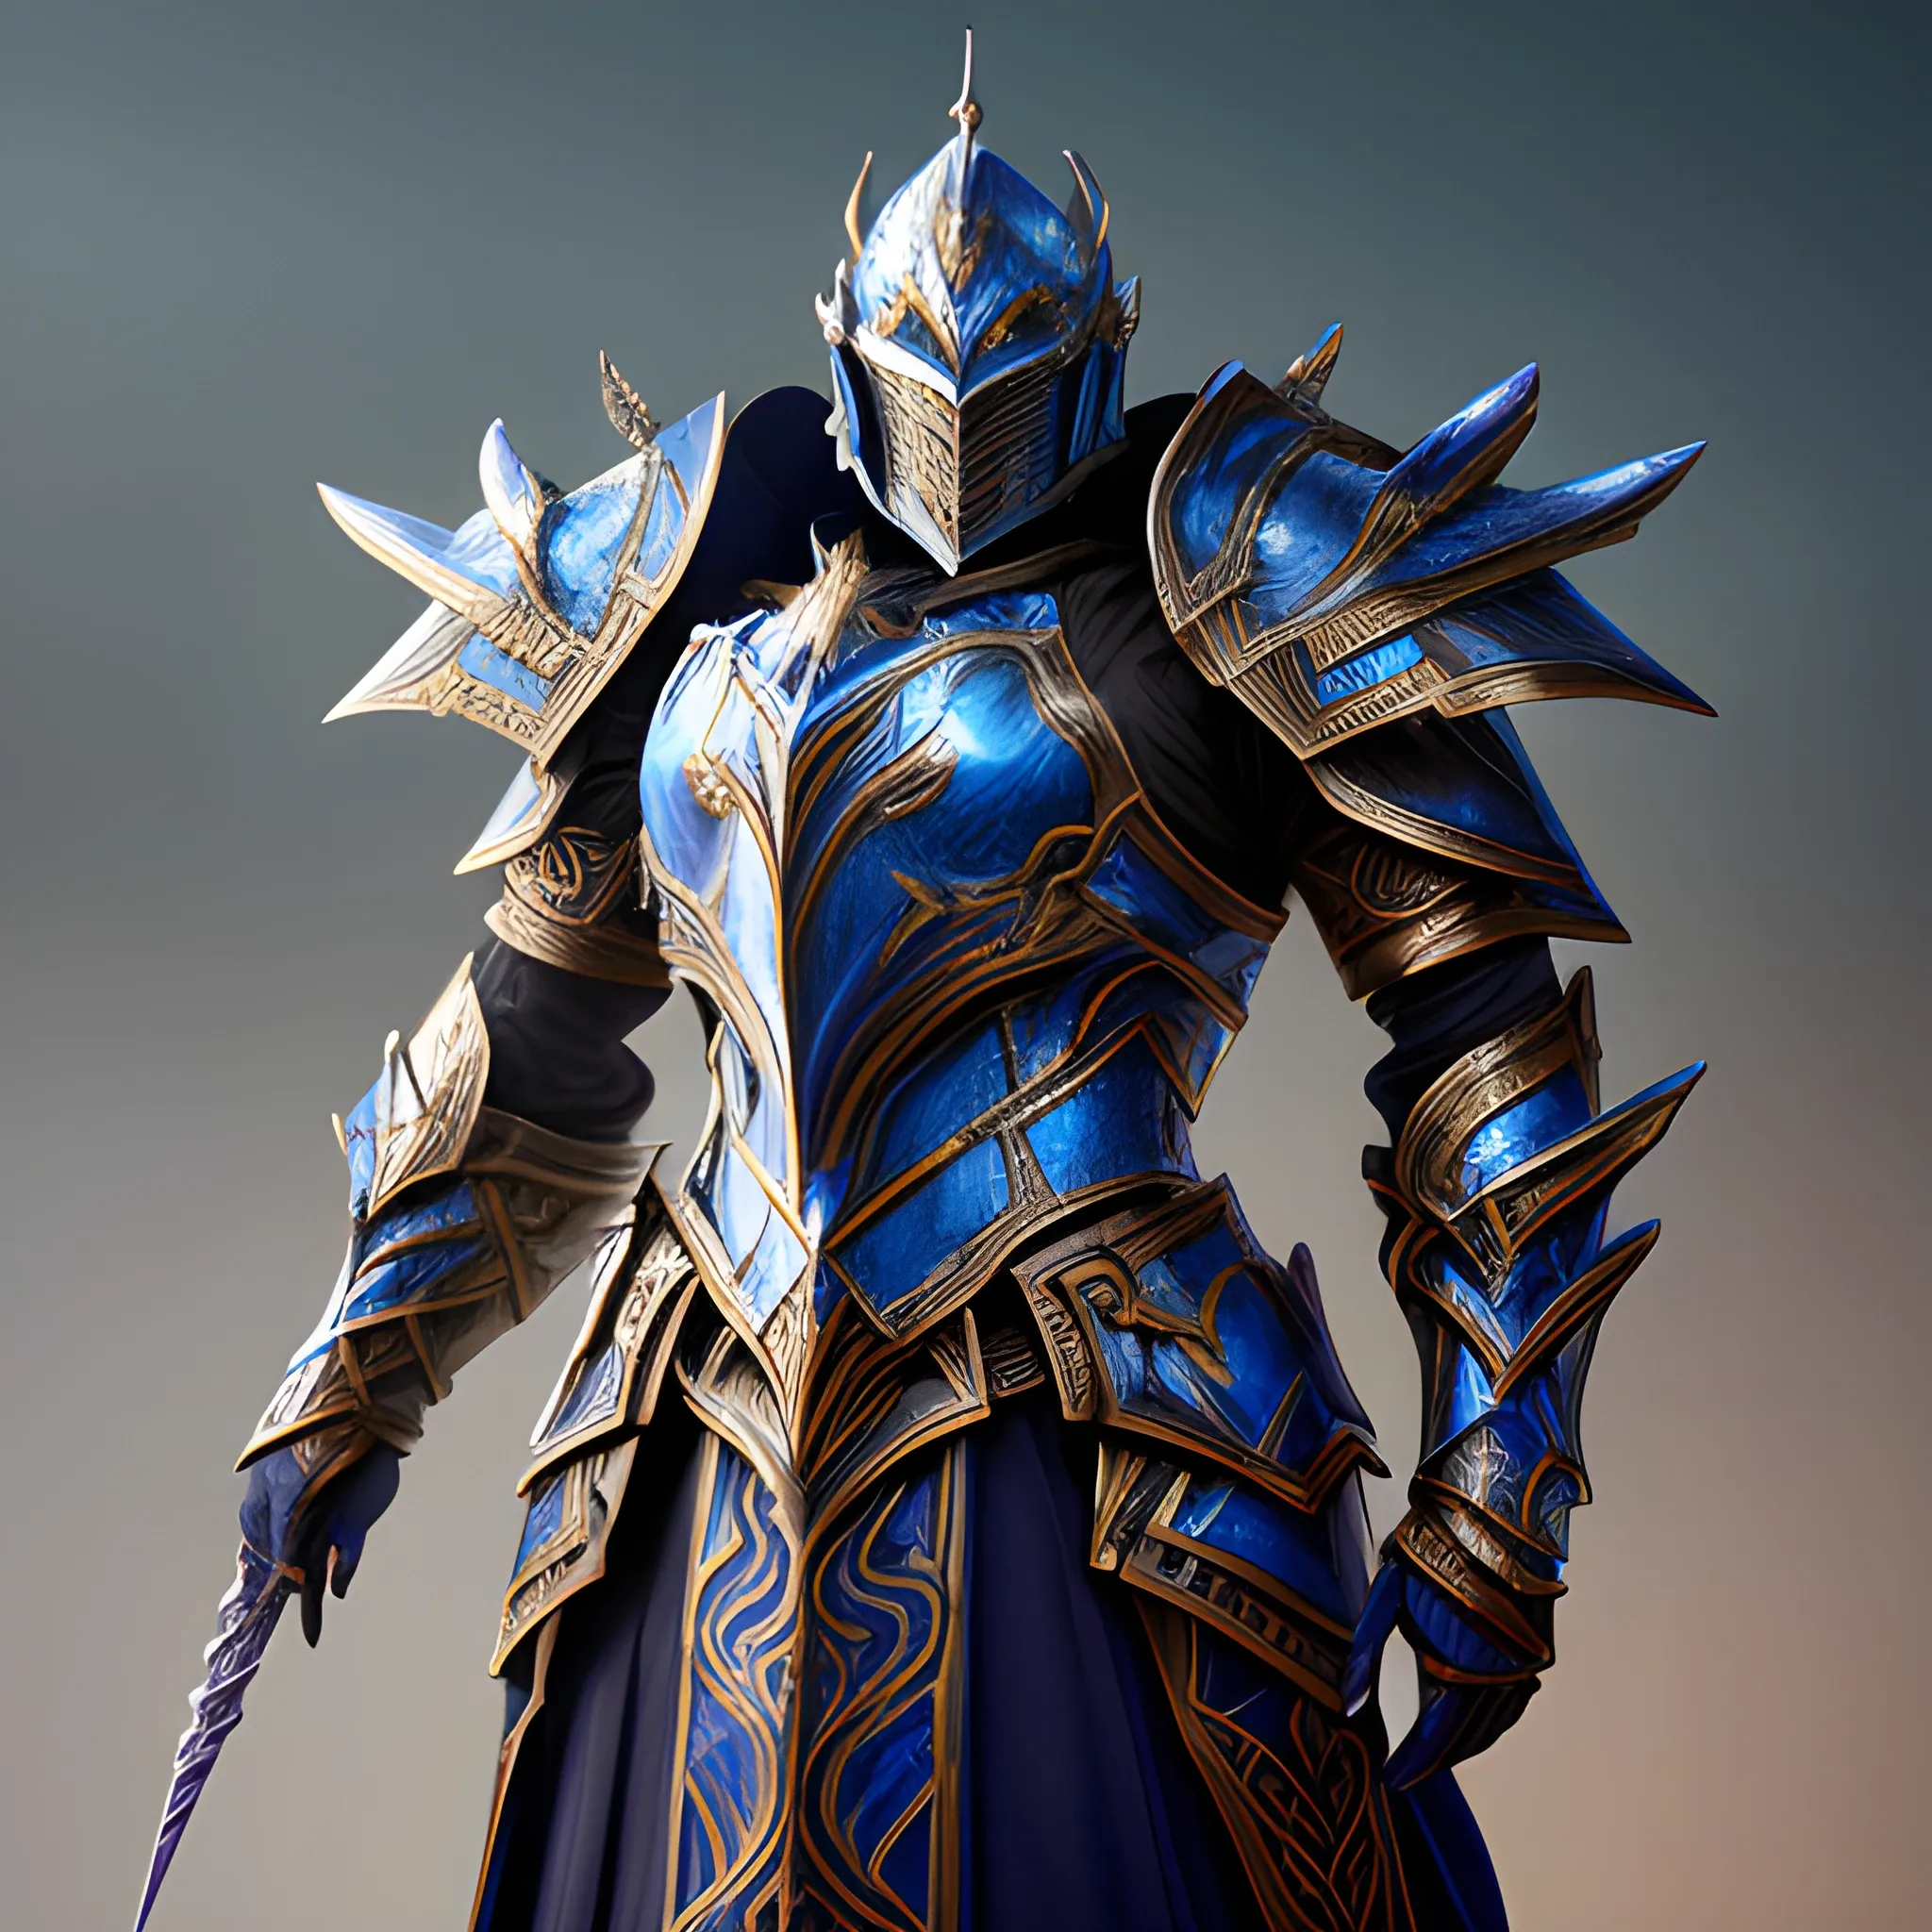 magic armor, shining armor, sorcerrer armor, high fantasy, 8k, h 